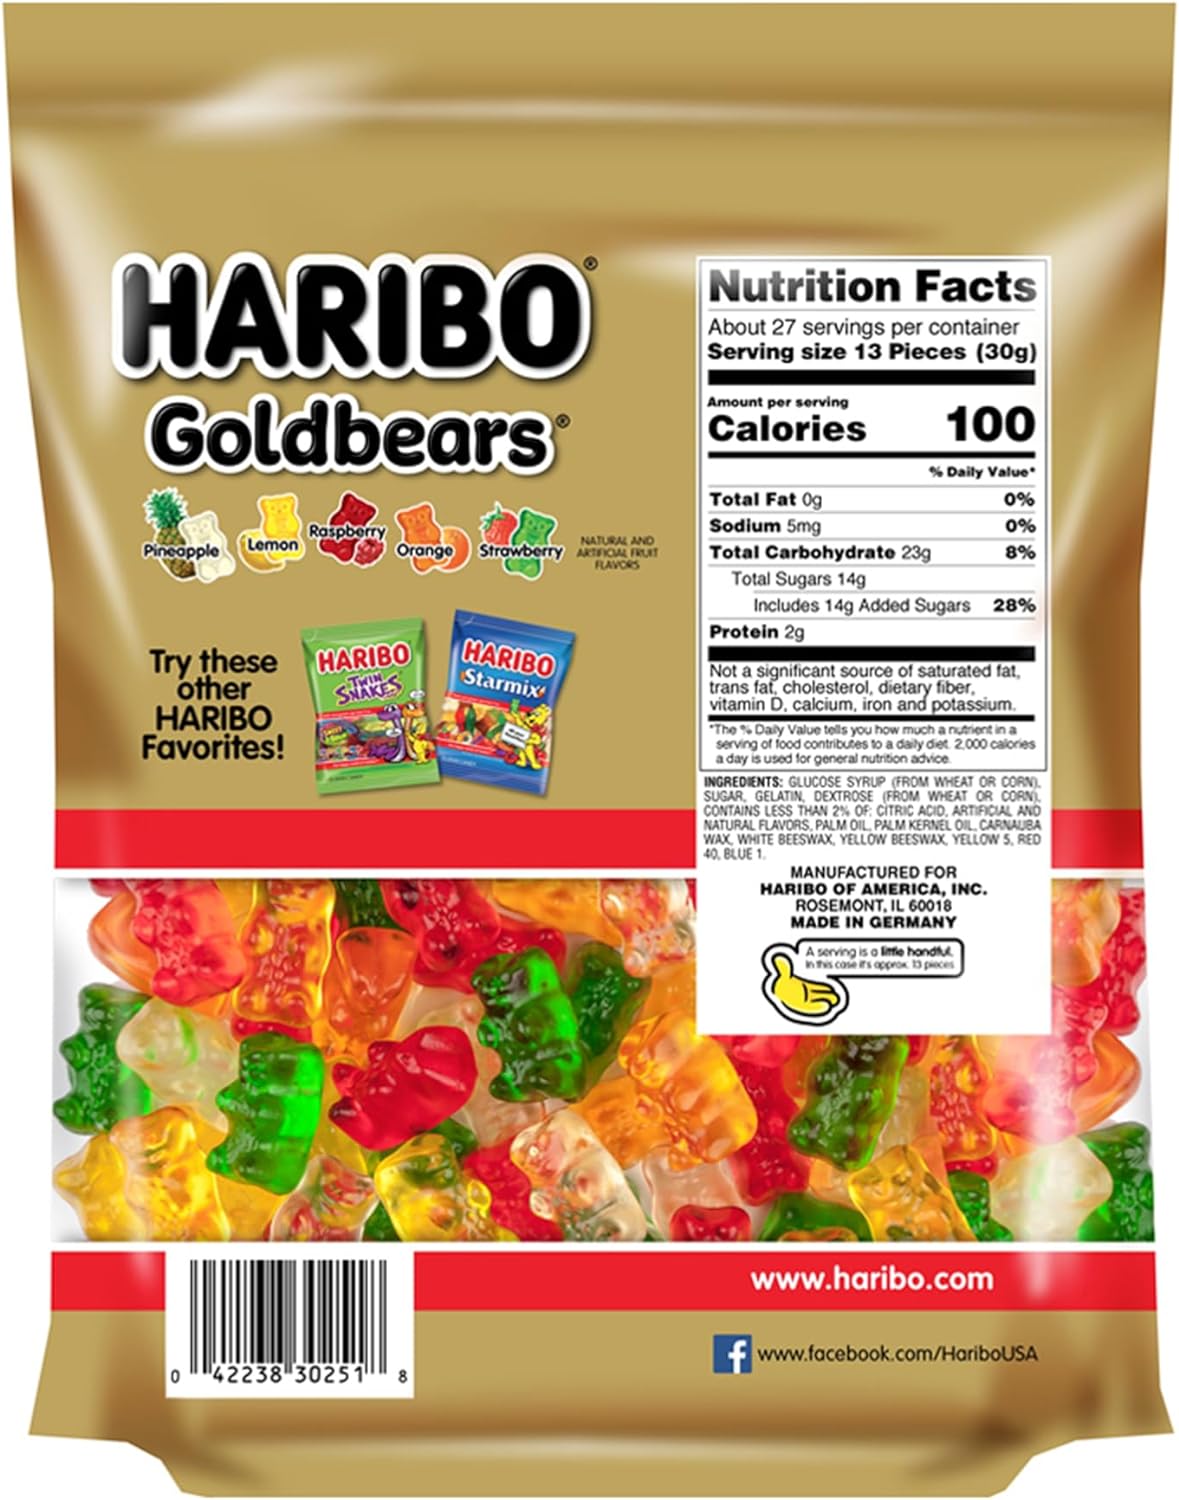 Haribo Goldbears Resealable Gummies Bag, 28.8 Oz